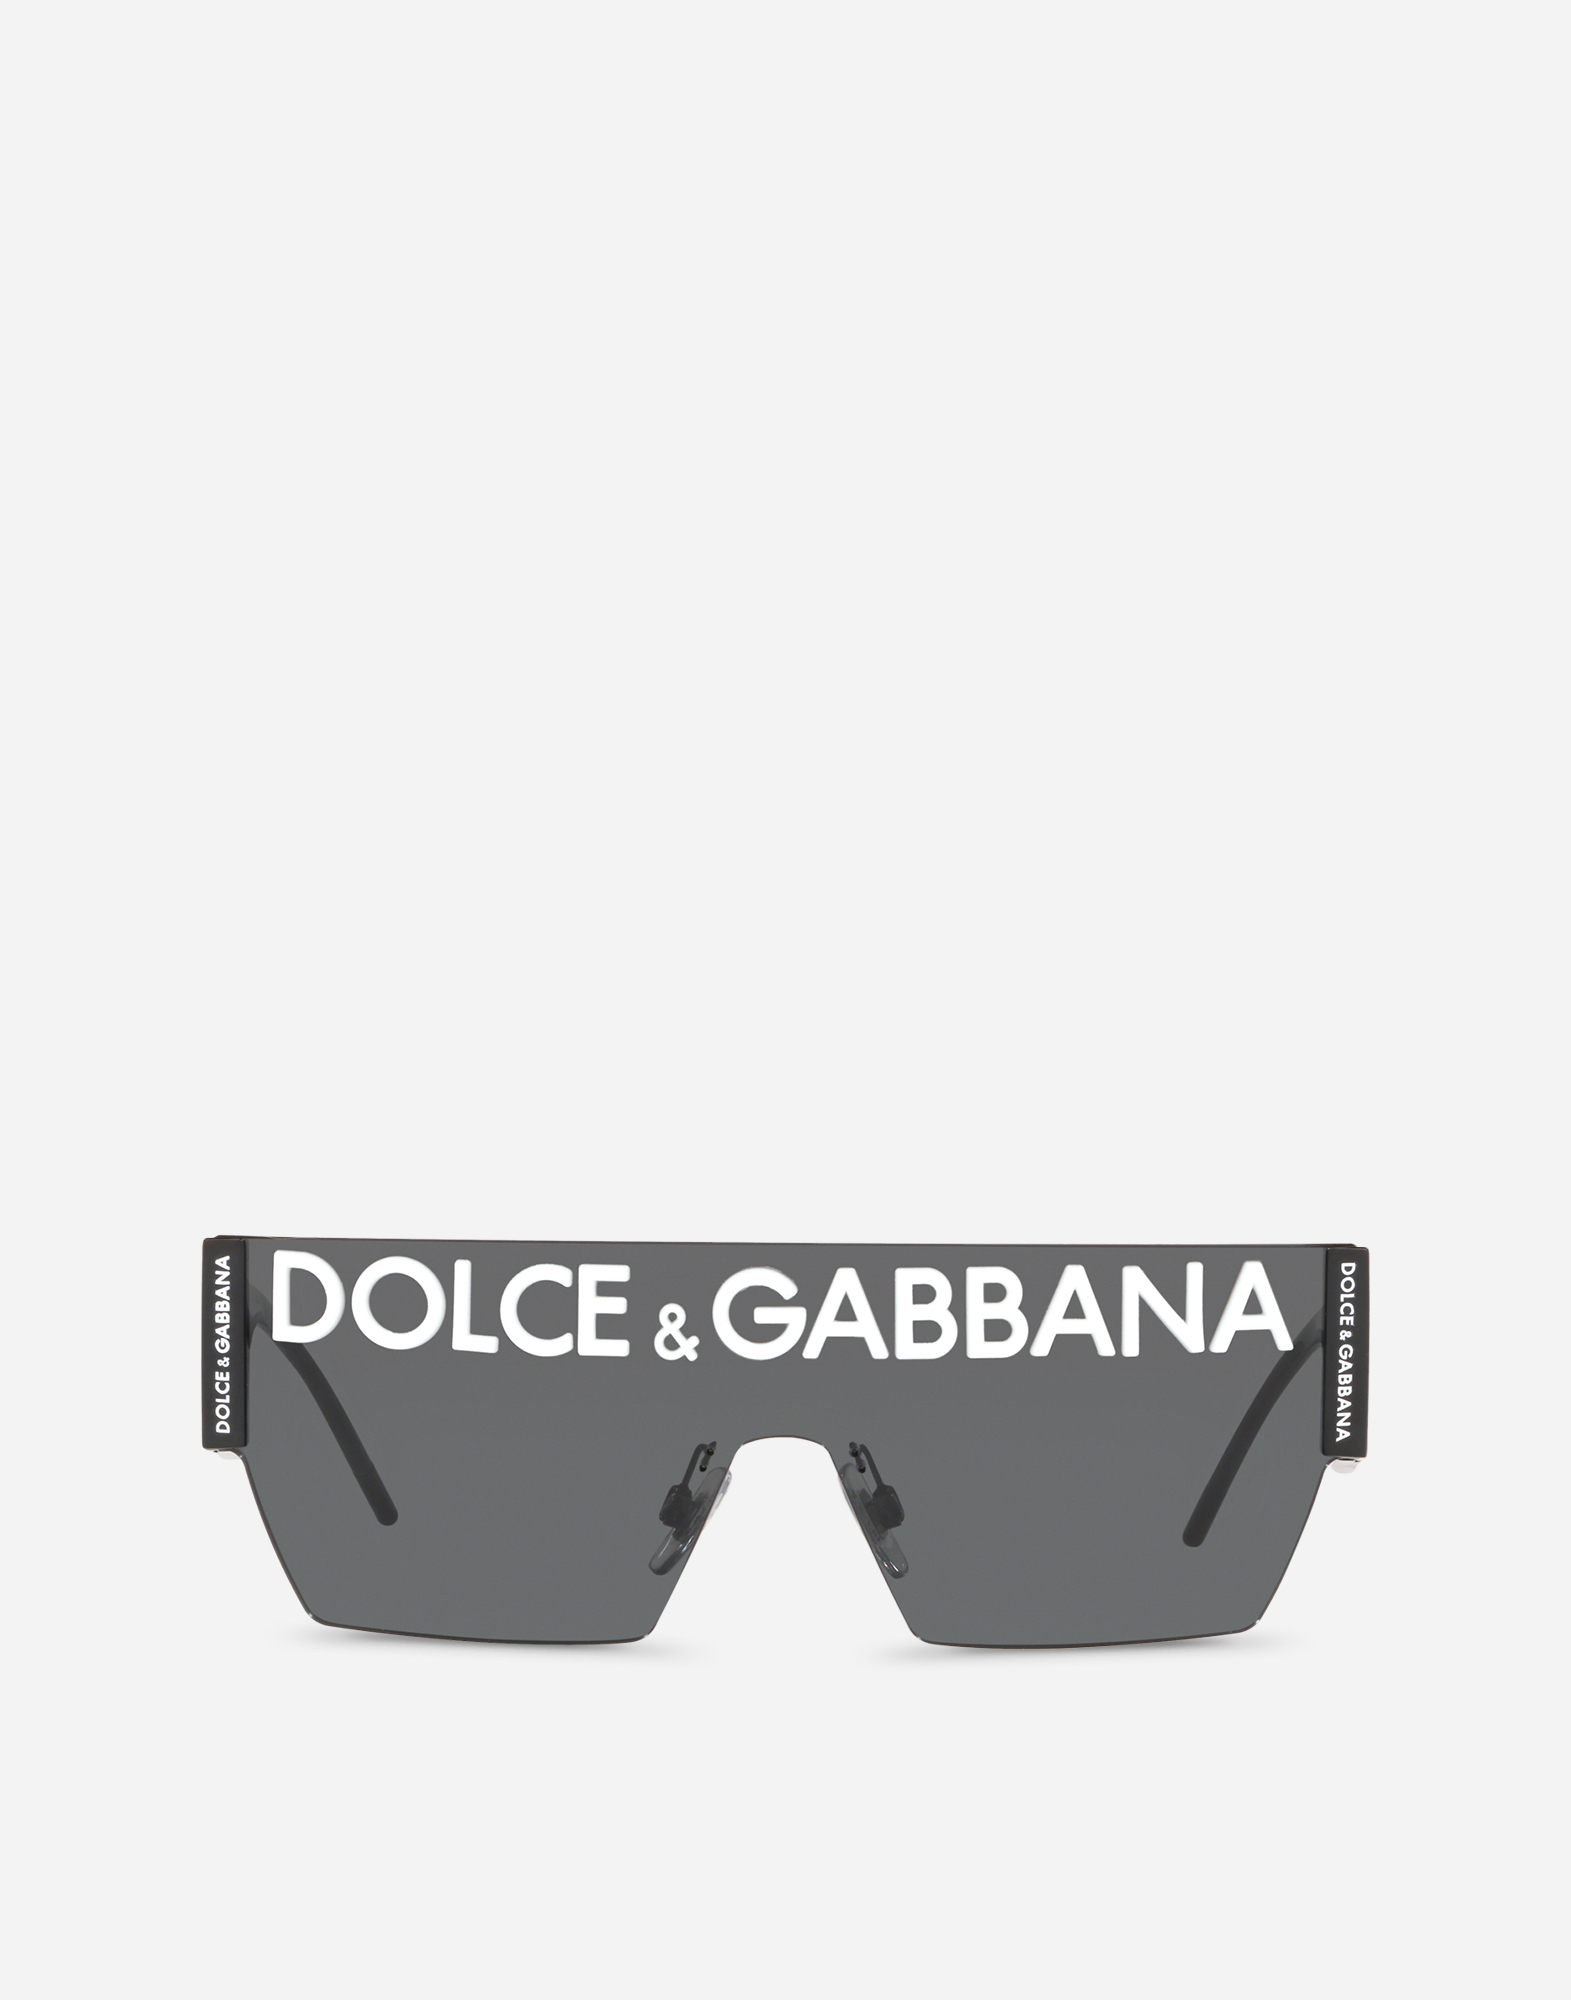 dolce and gabbana yellow sunglasses